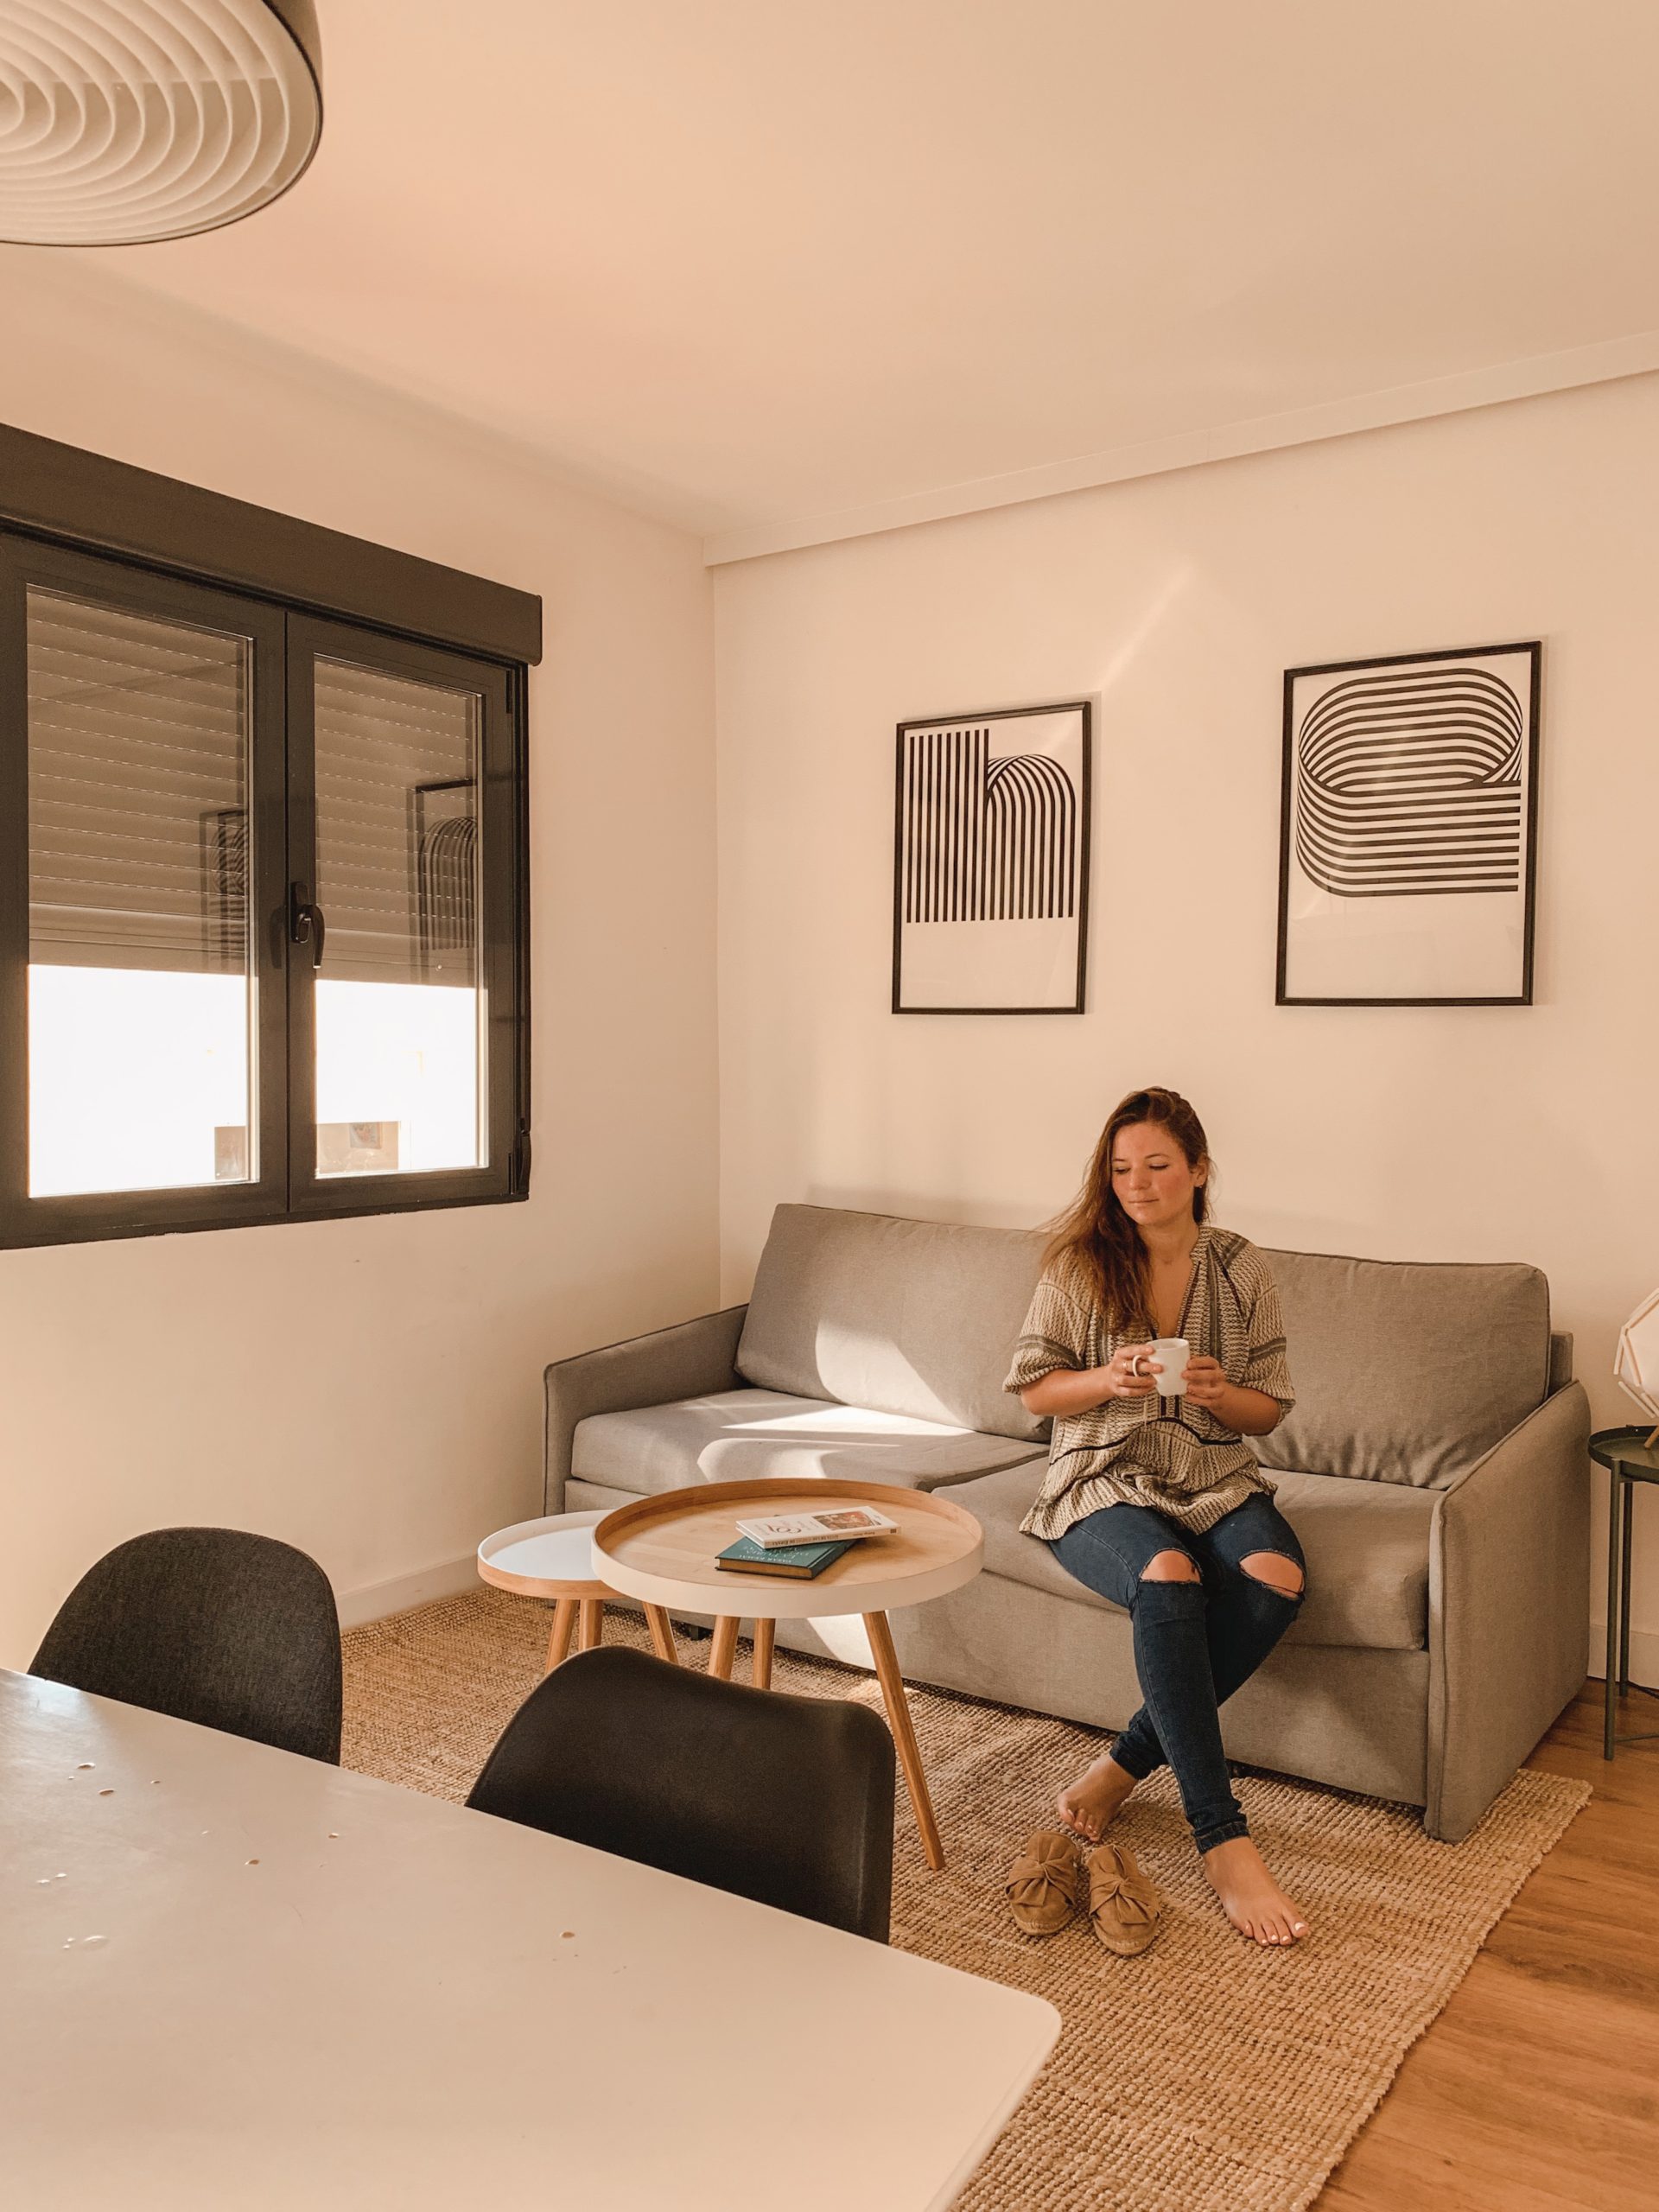 Best Tourist Apartment Rentals In Barcelona | lifestyletraveler.co | IG: @lifestyletraveler.co